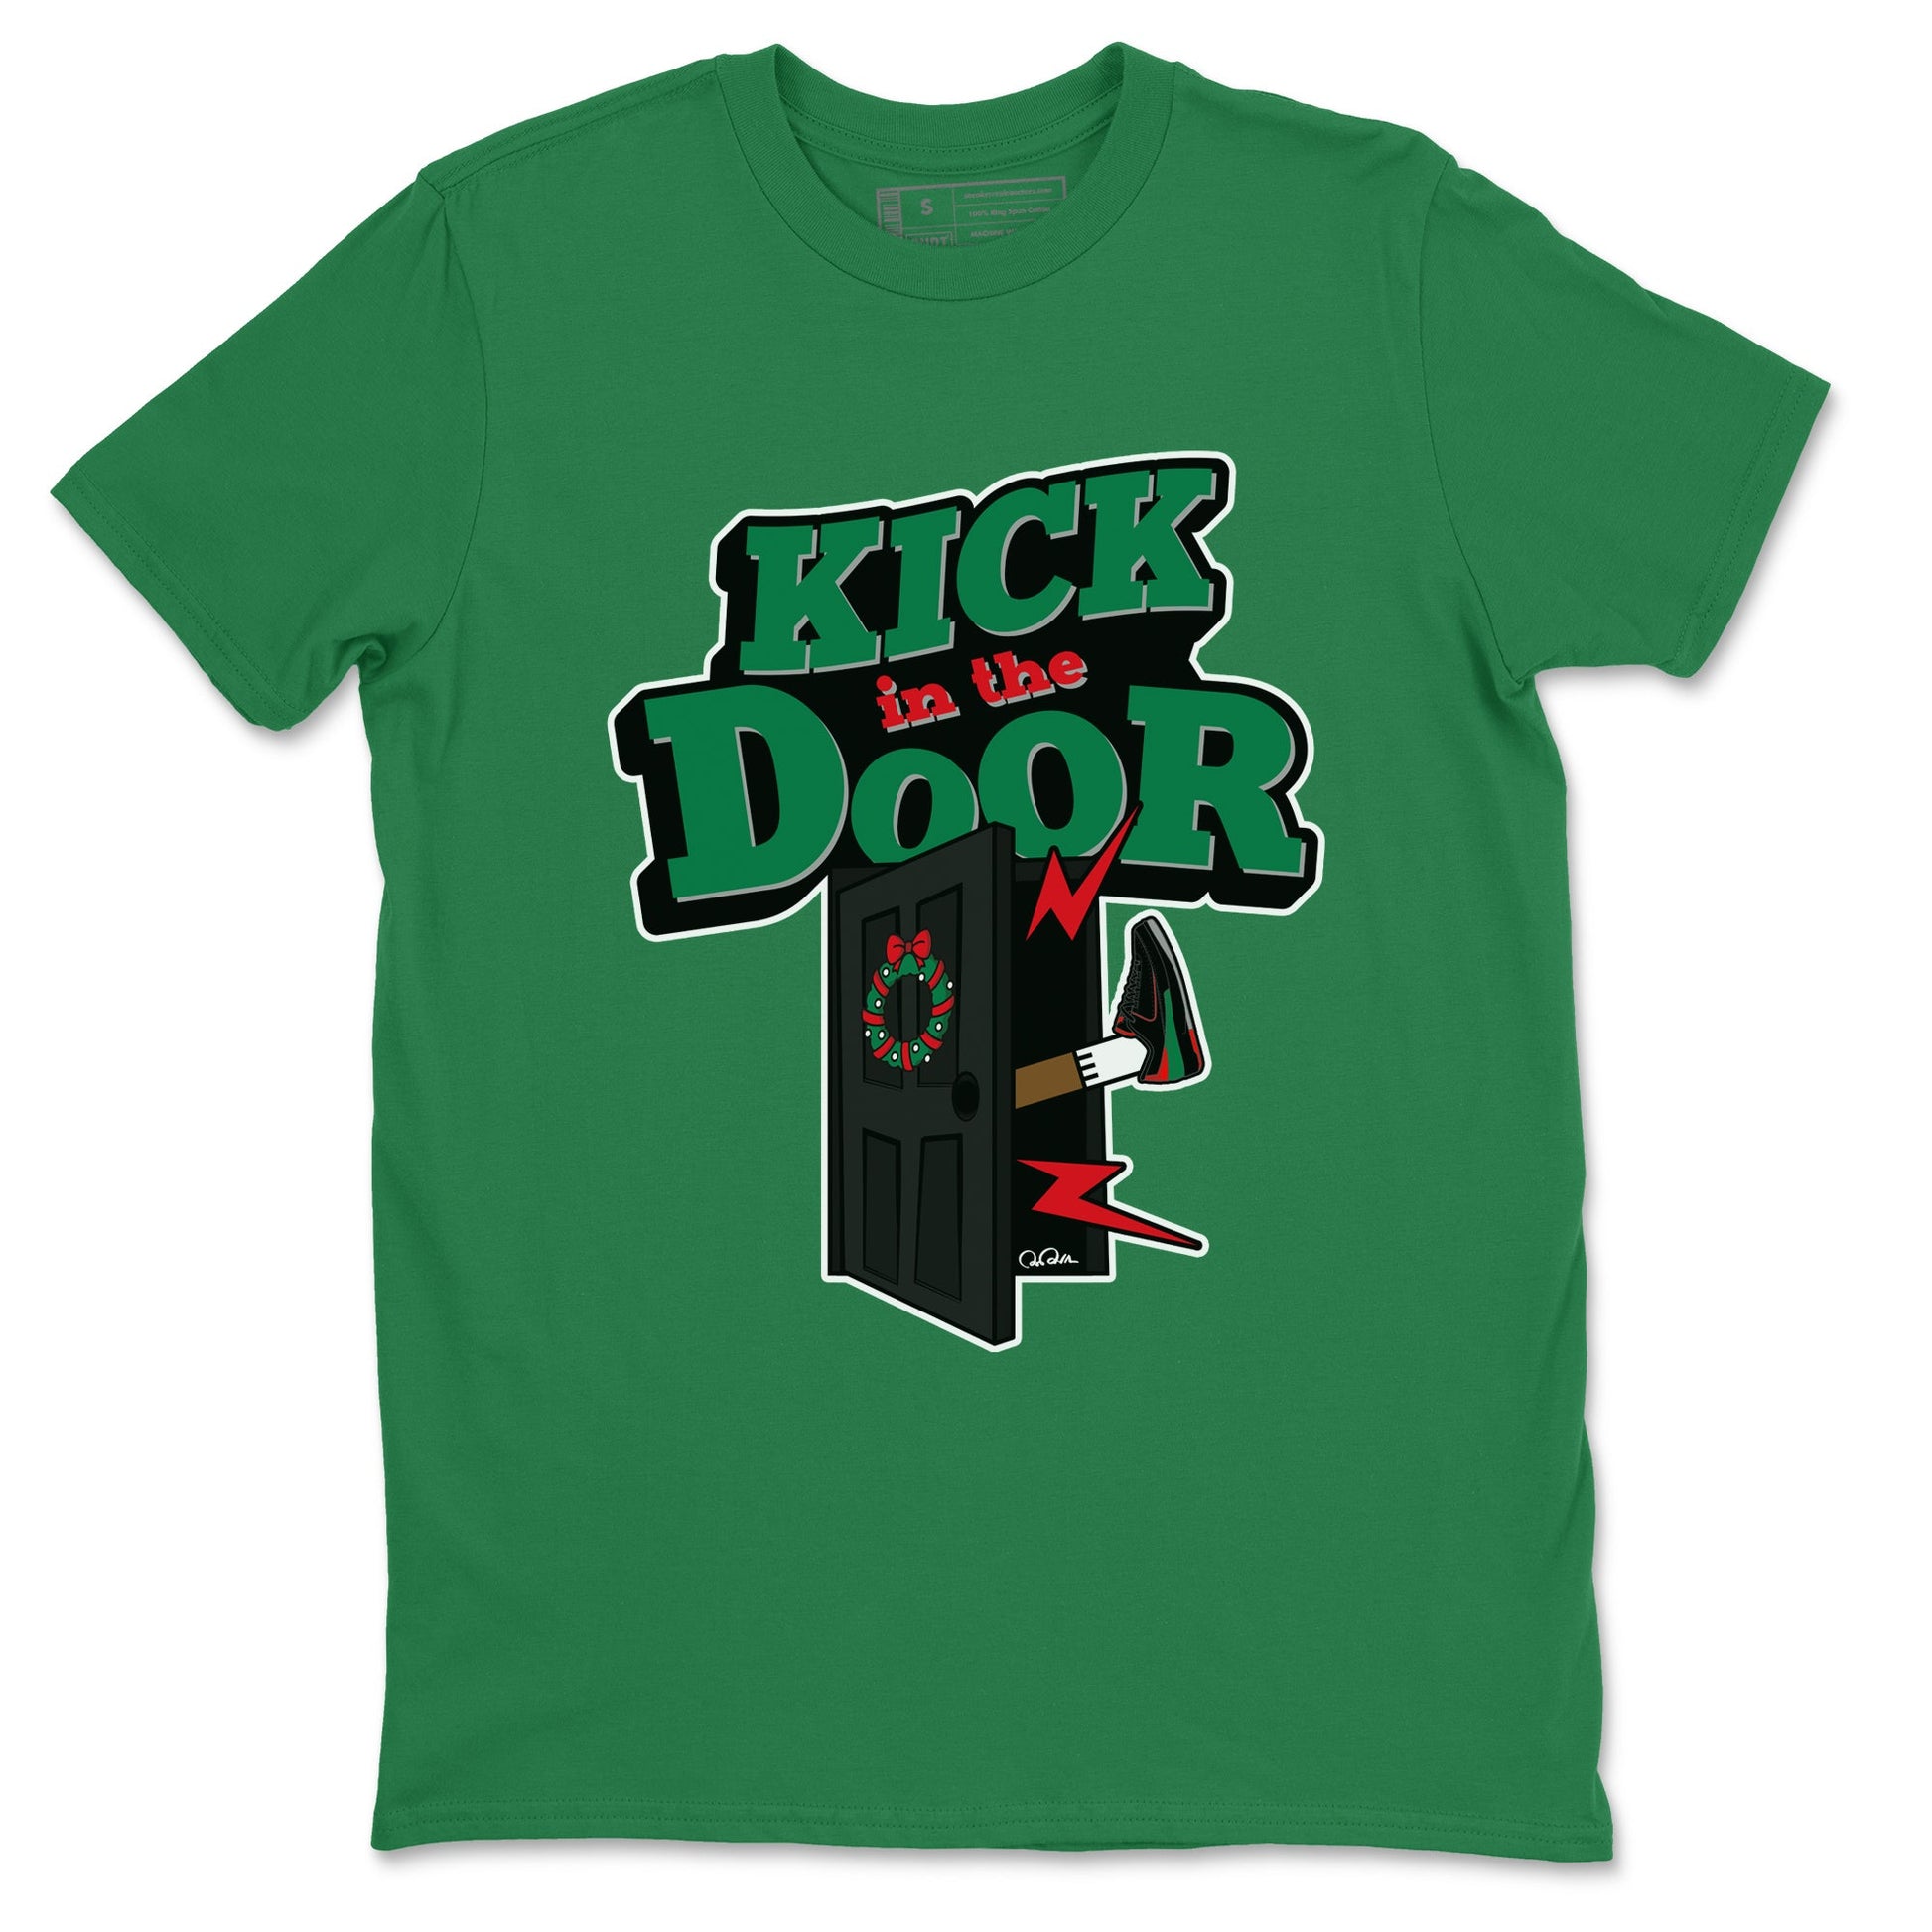 2s Christmas X-mas gift shirt to match jordans Kick In The Door sneaker tees Air Jordan 2 Christmas SNRT Sneaker Release Tees Unisex Kelly Green 2 T-Shirt